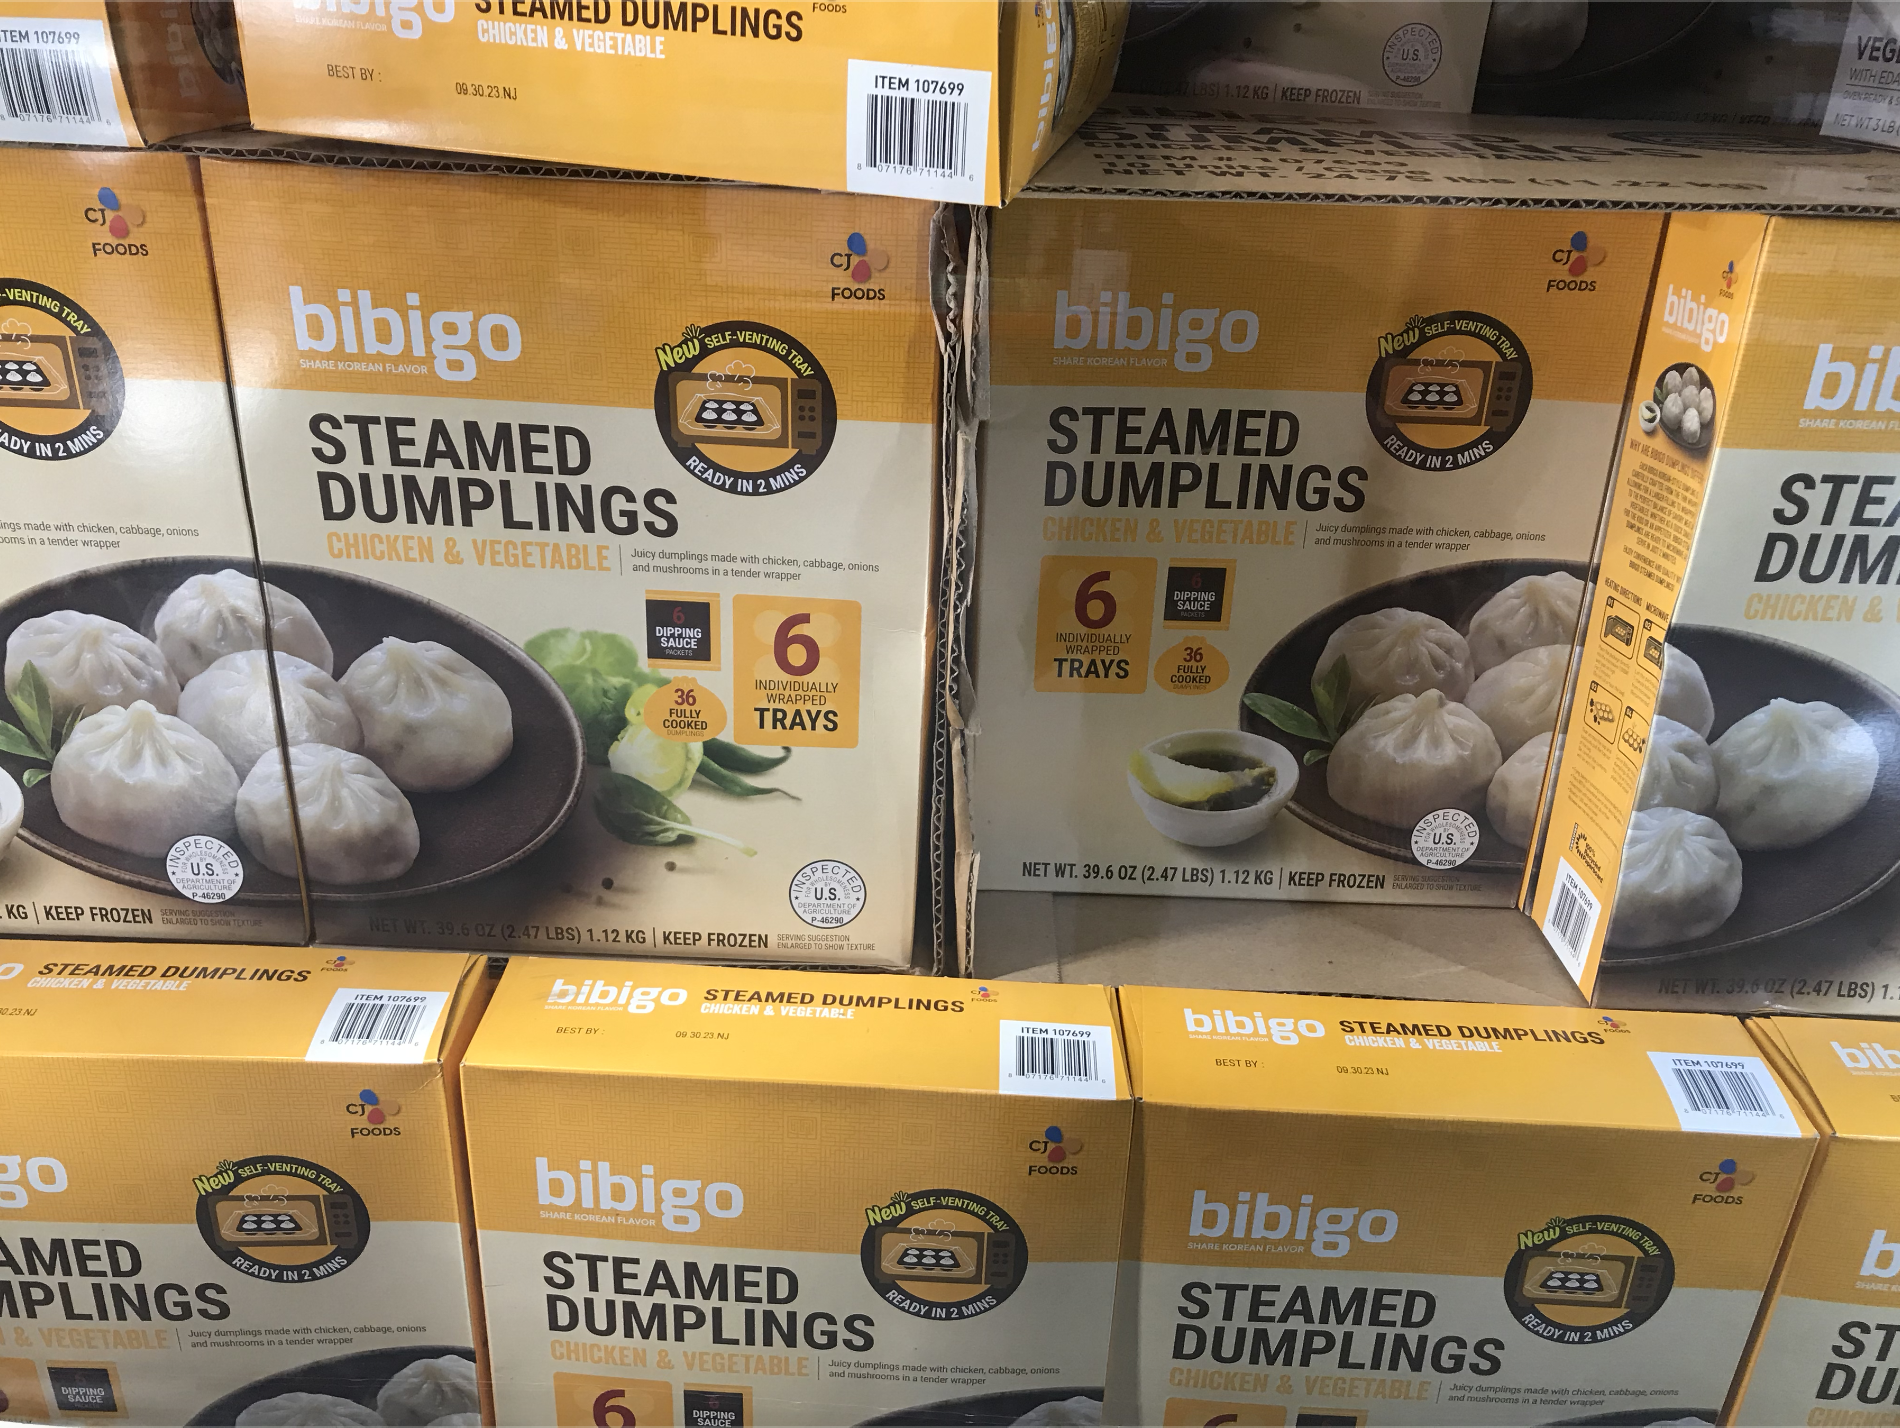 Costco Bibigo Steamed Dumplings Review - Costcuisine